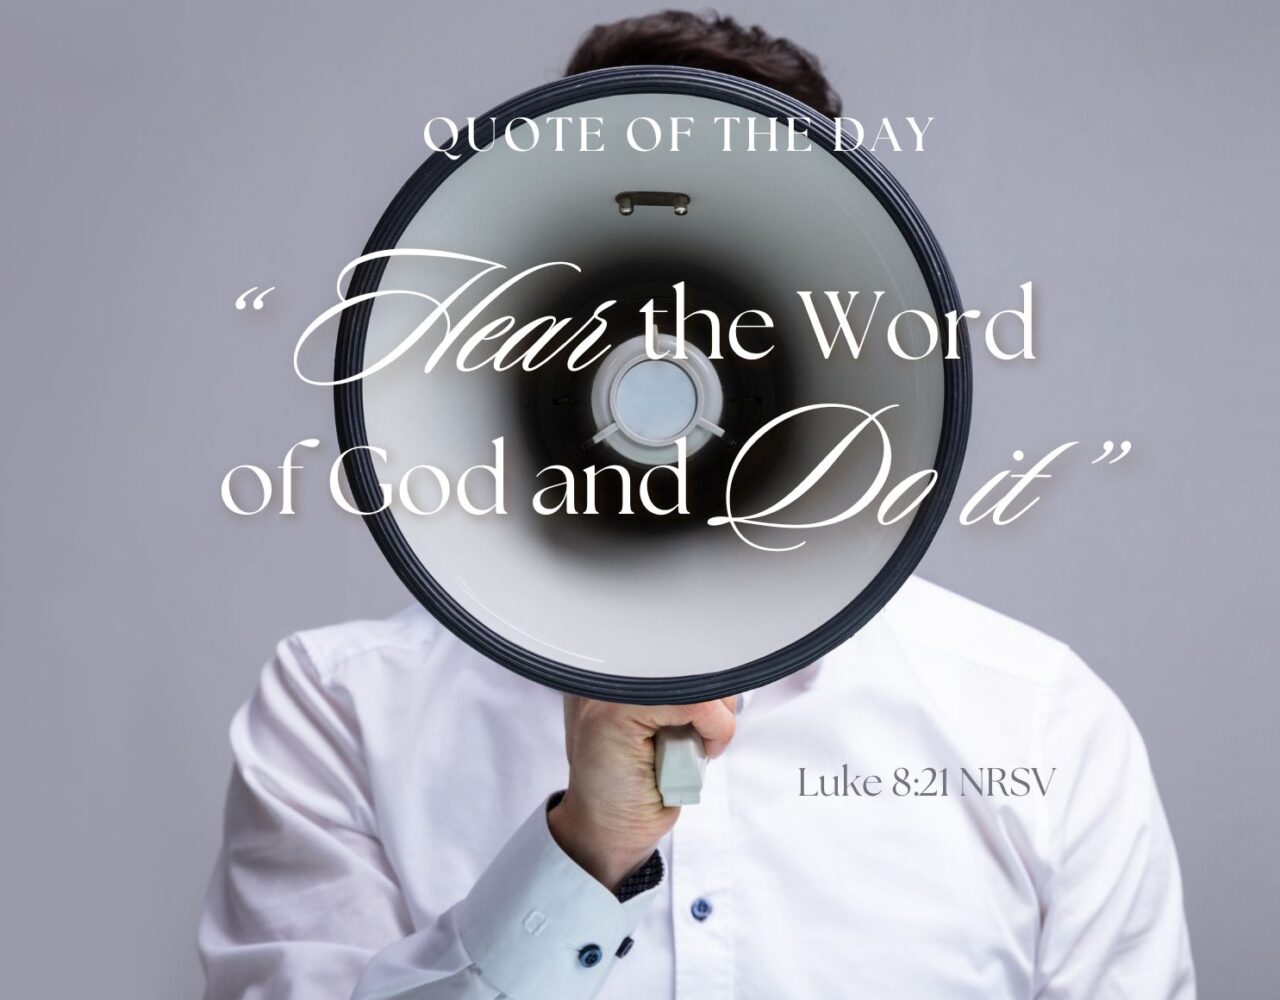 ‭‭Today’s Passage: ‭‭‭‭‭‭‭‭‭‭‭‭Luke‬ ‭8‬:‭21‬ ‭NRSV‬‬